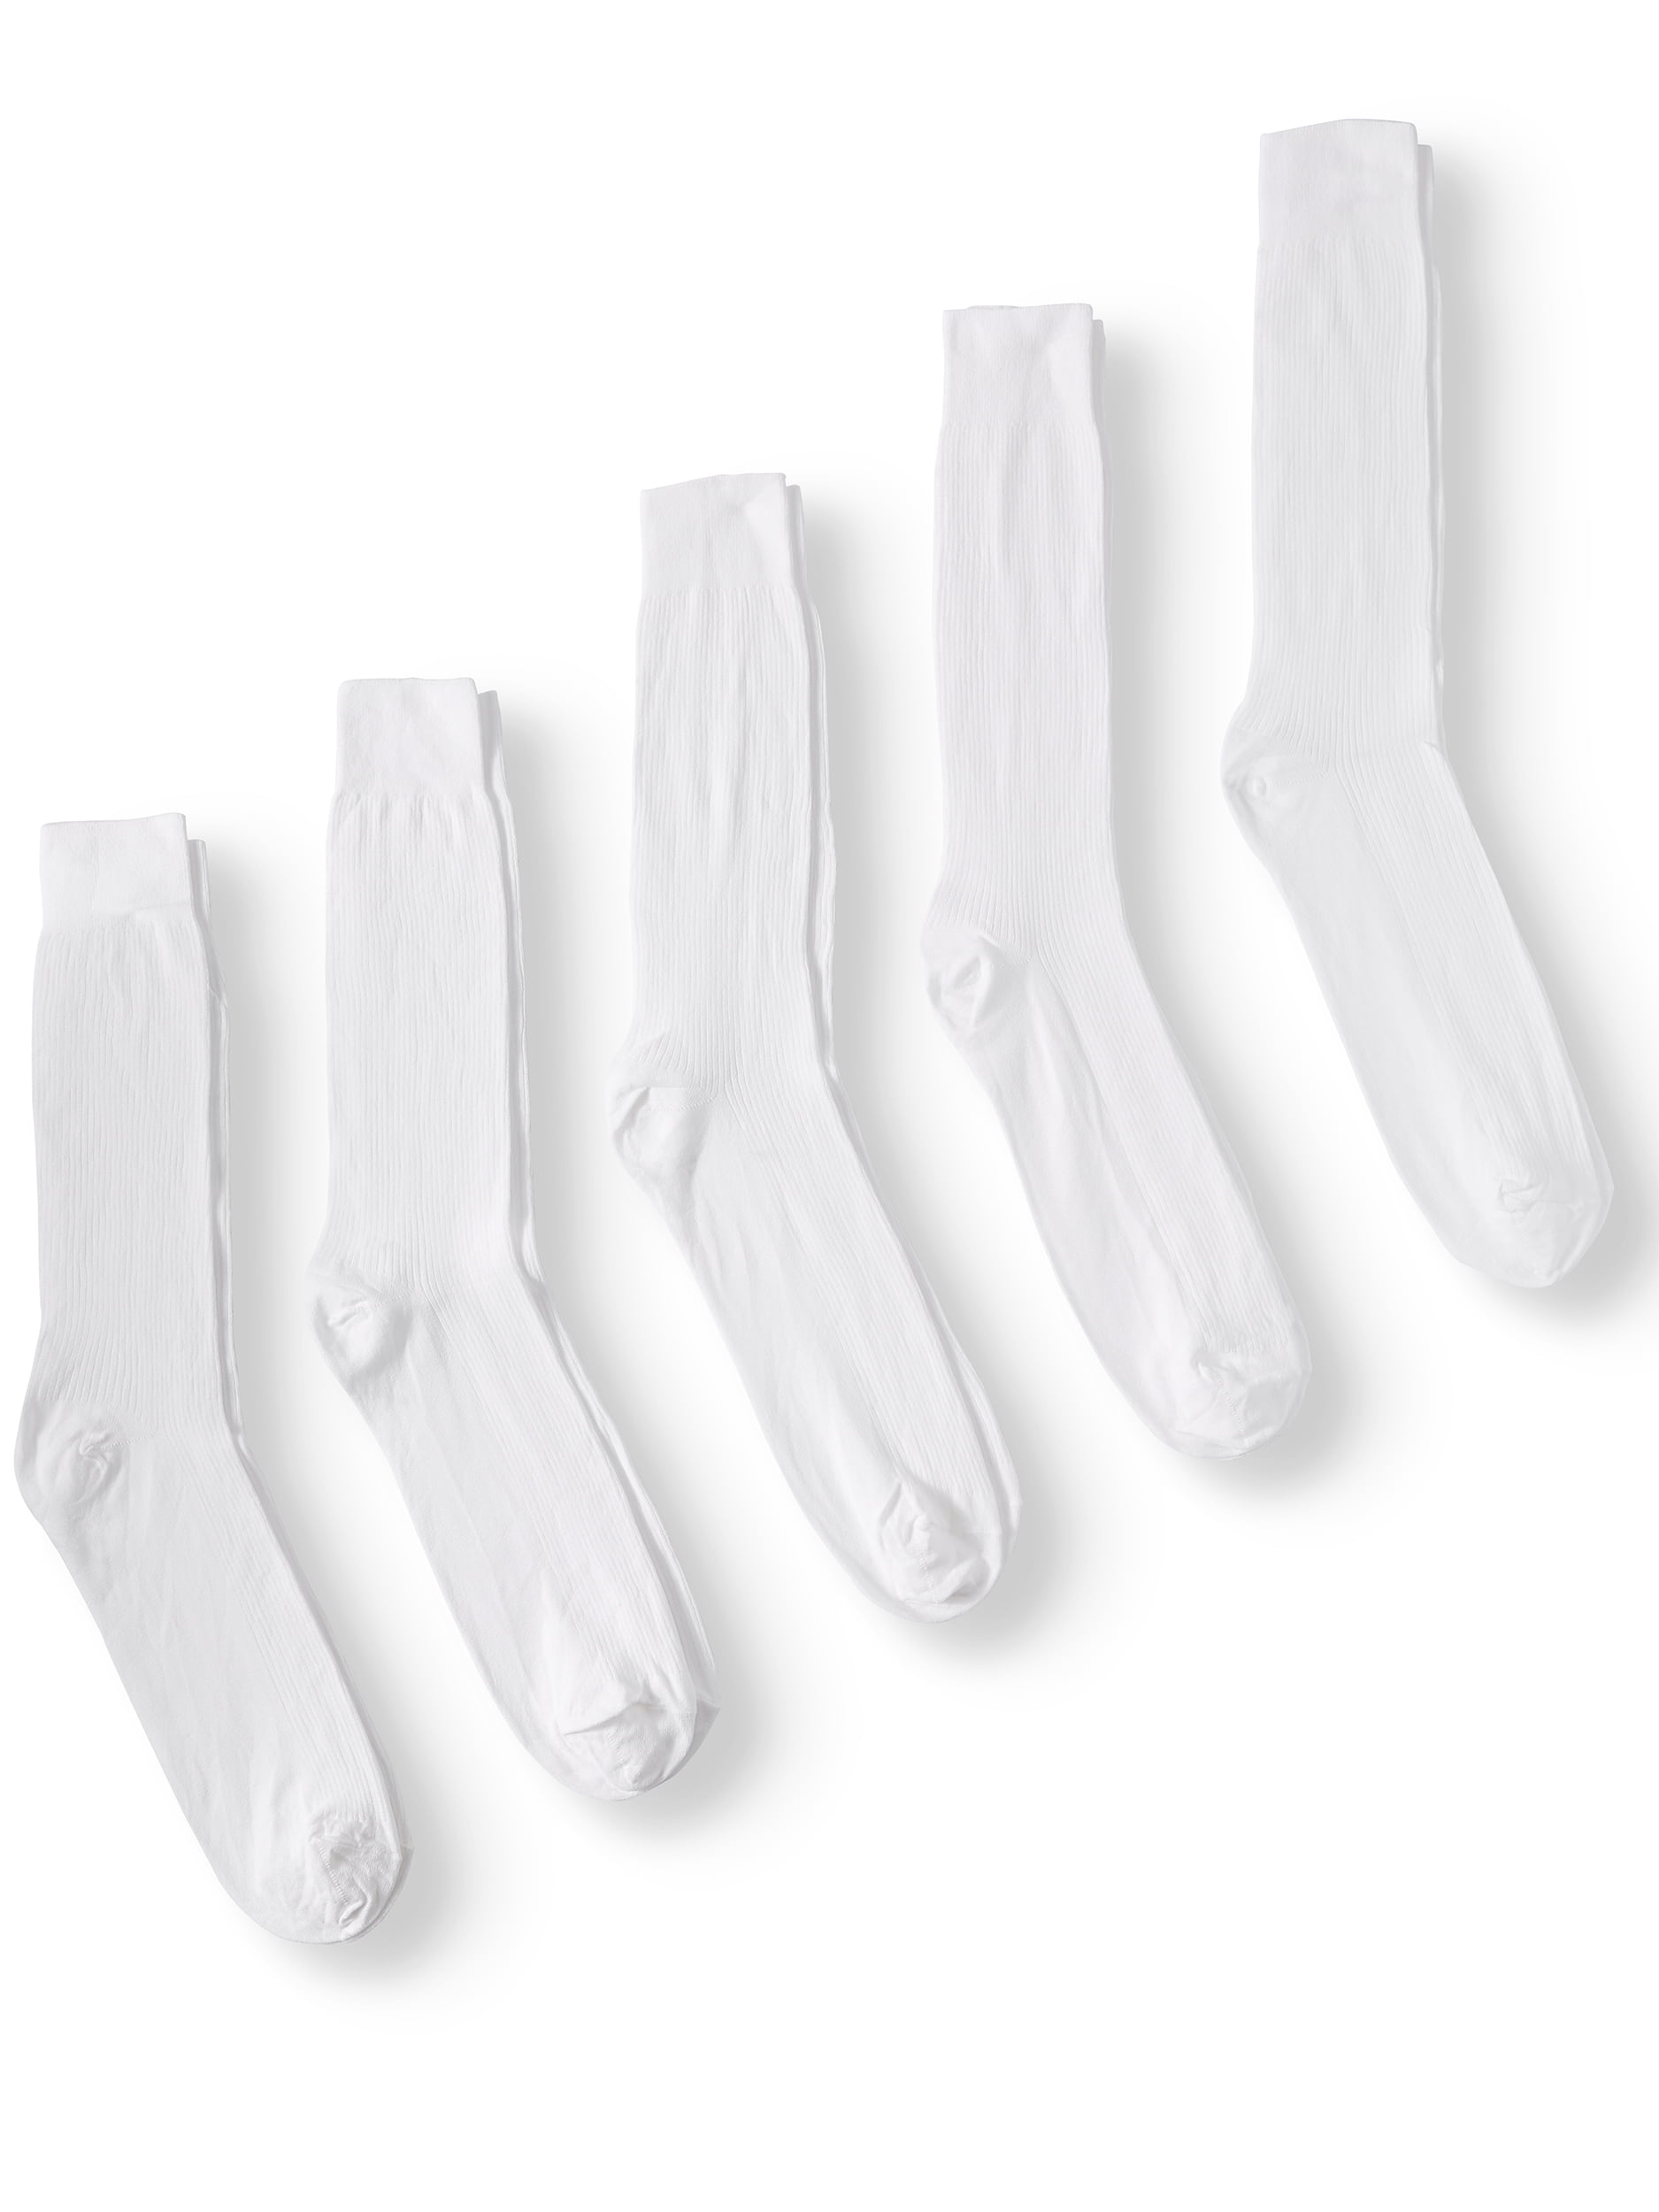 George Nylon Triple Rib Crew Socks, 5-Pack - Walmart.com